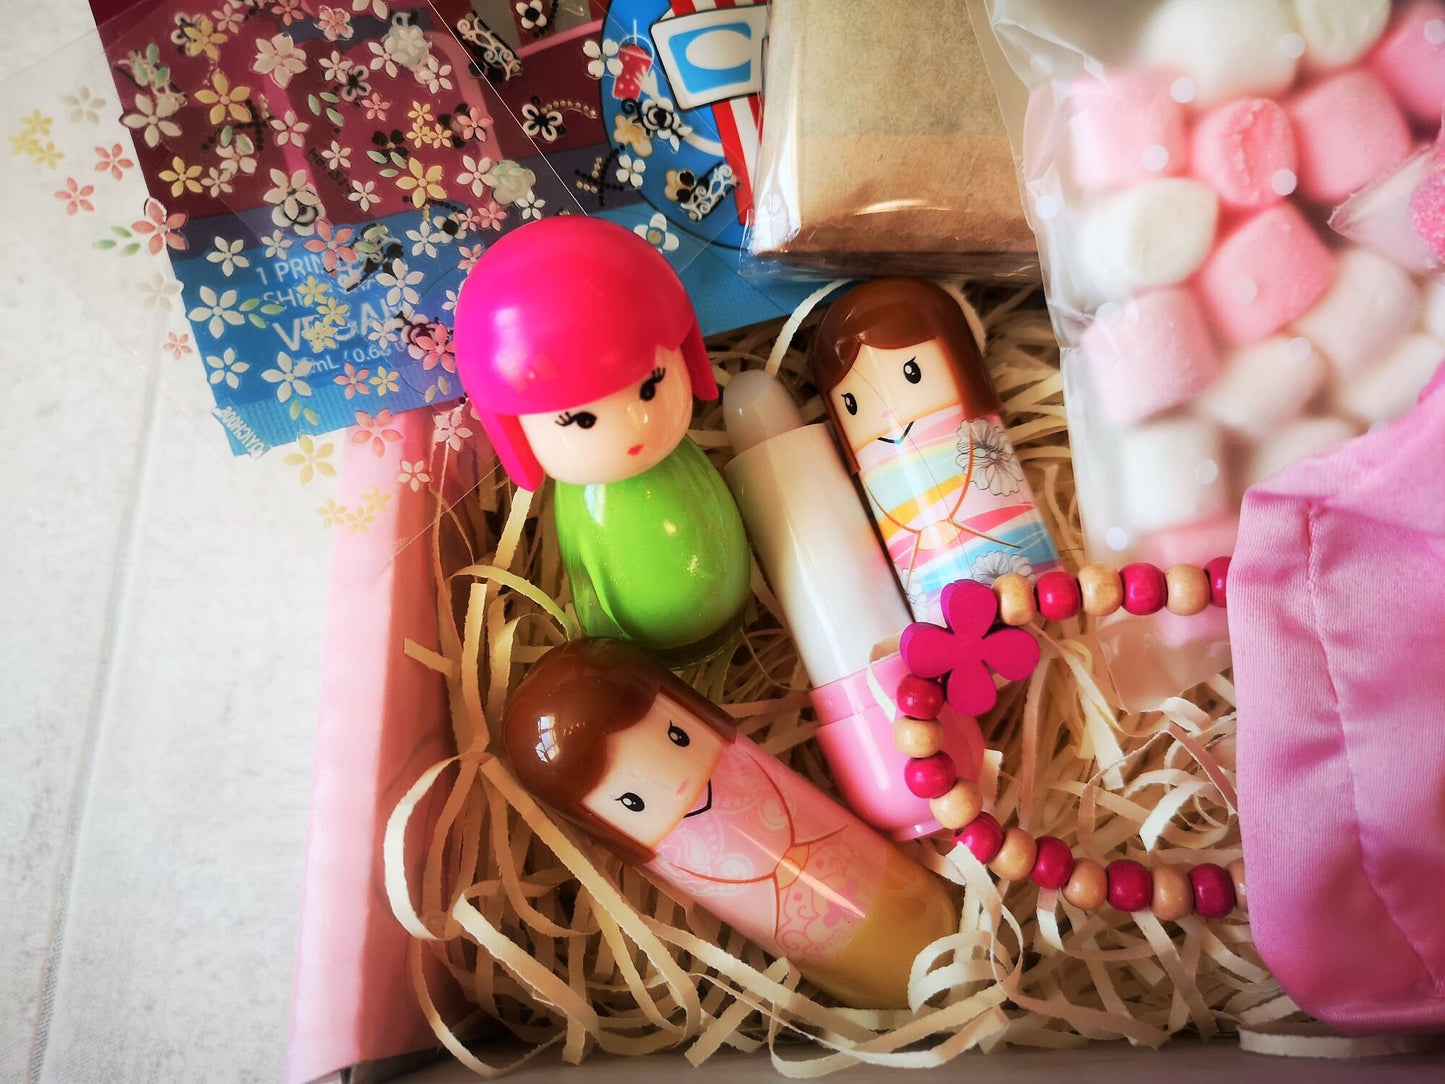 Young Girl Birthday Spa Box | Kids Pamper Gift | Sleepover Kit | pre-teen night in Box | Little Girl Gift Box